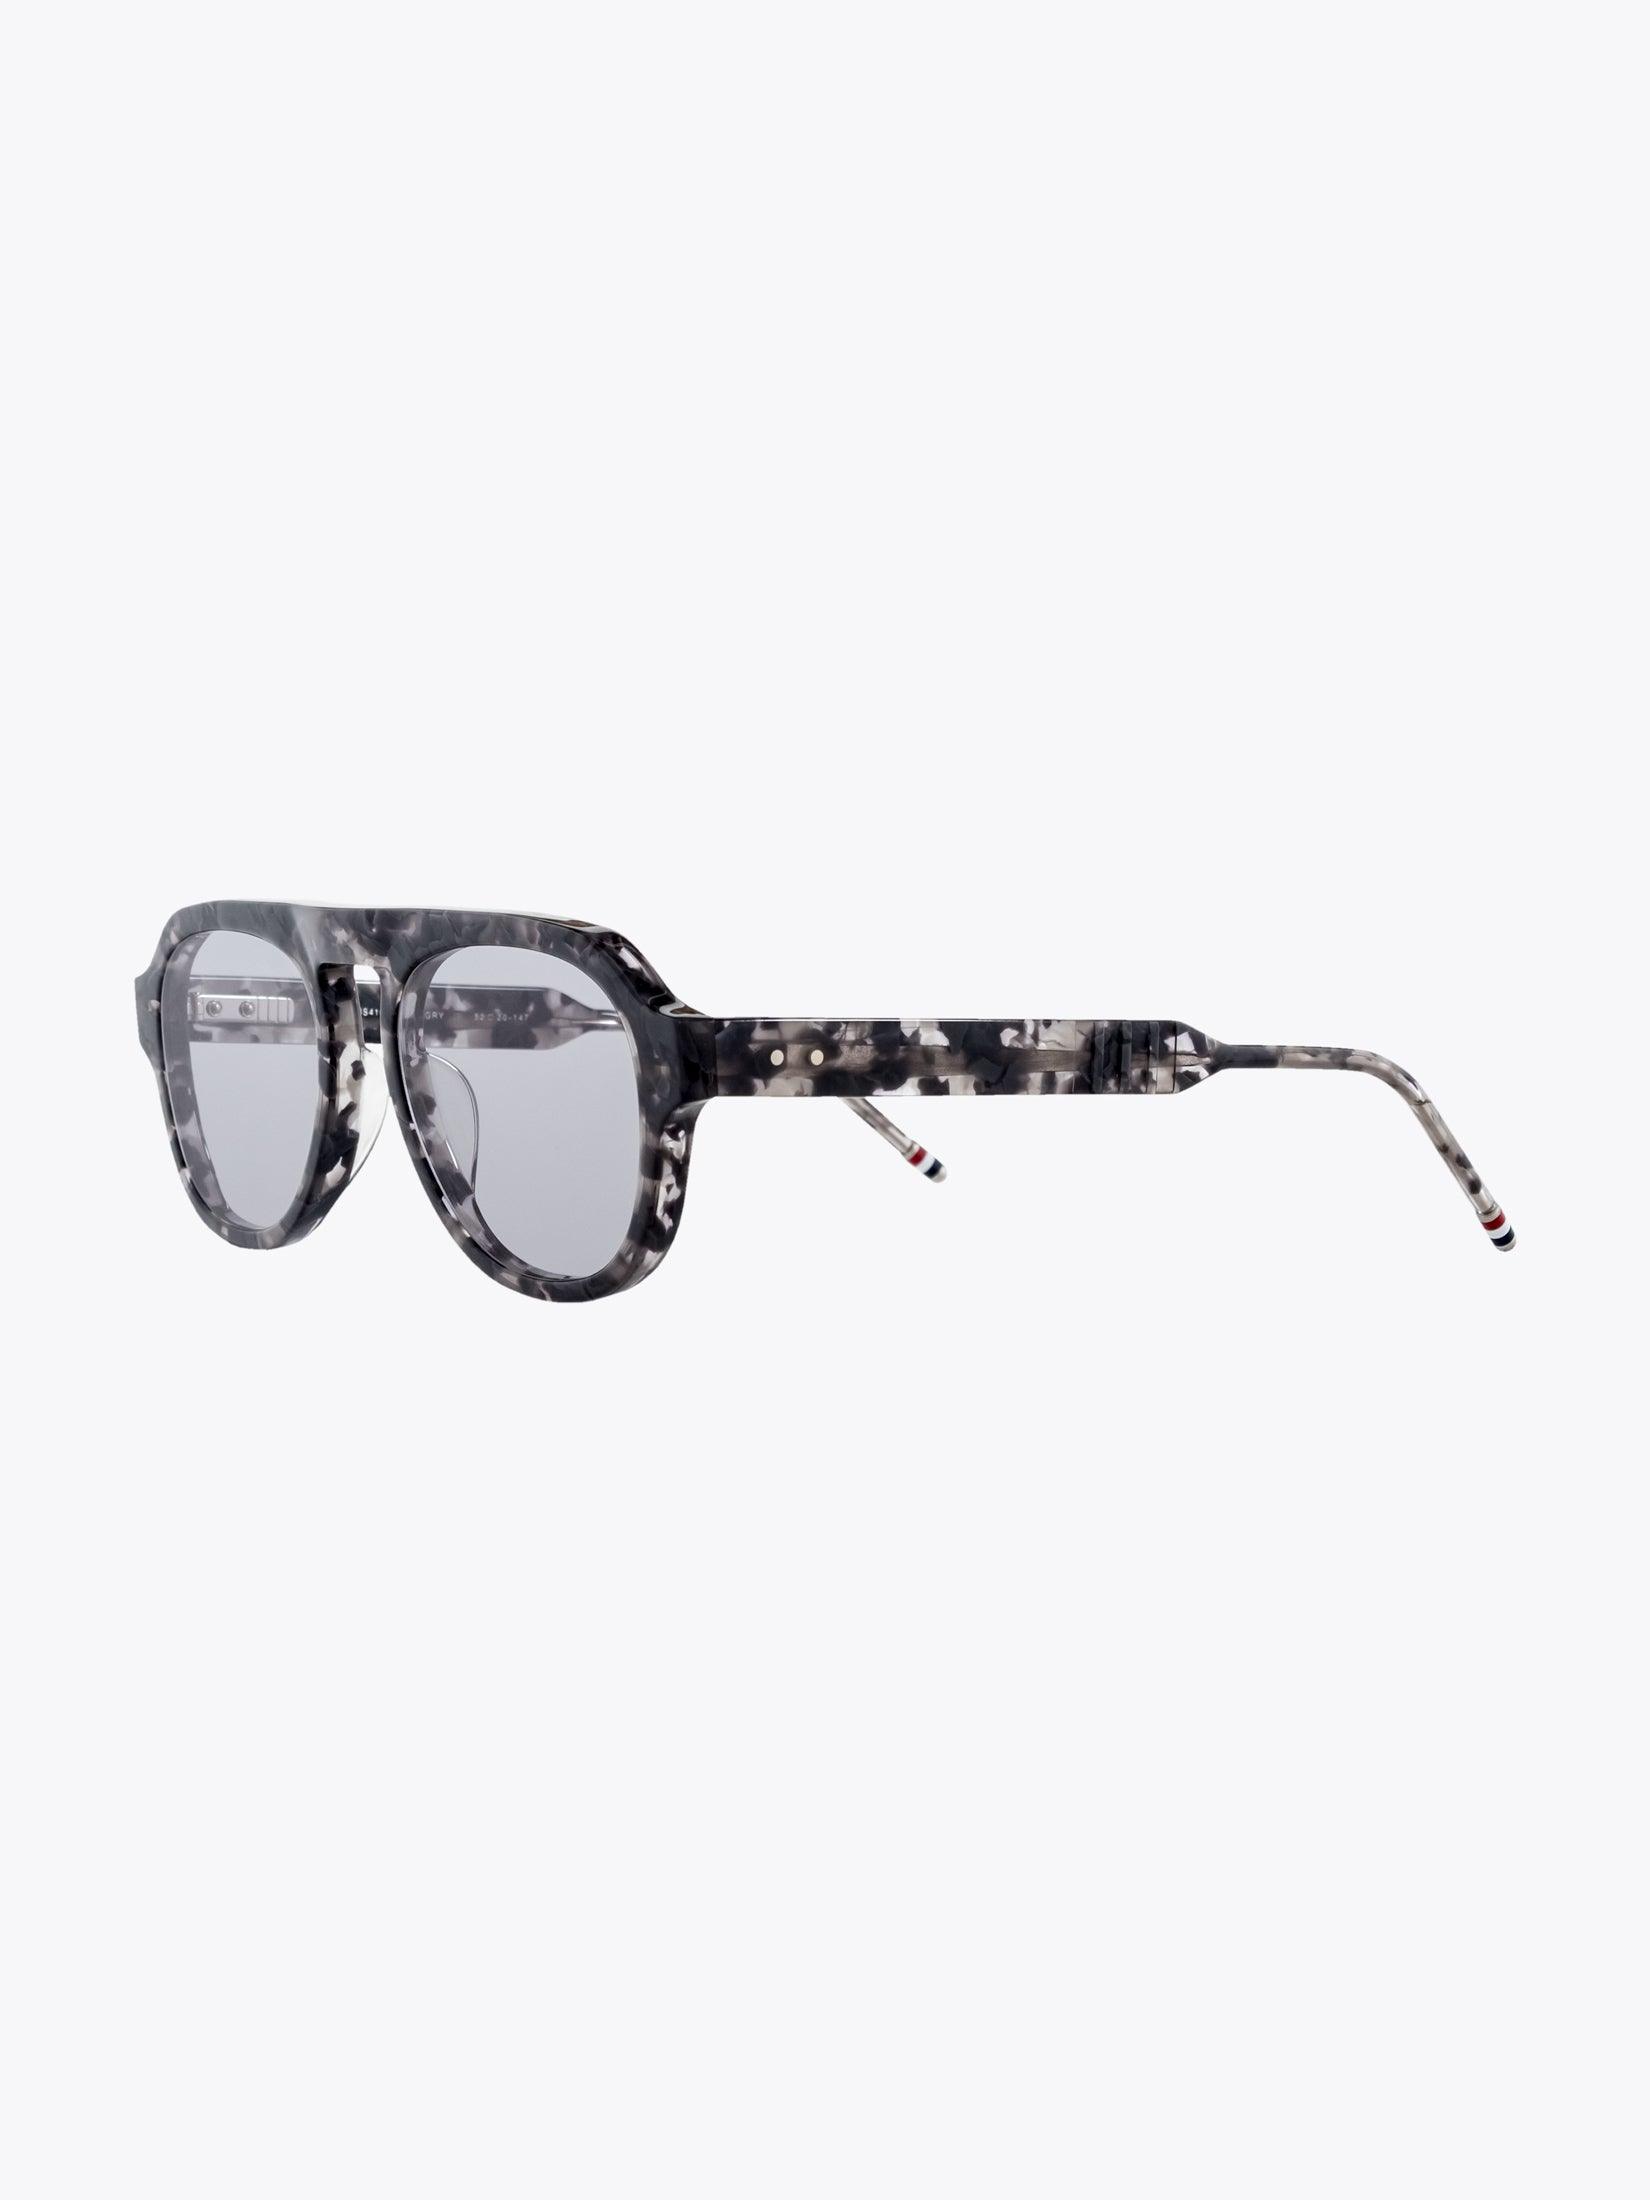 Thom Browne TB-416 Grey Tortoise Sunglasses